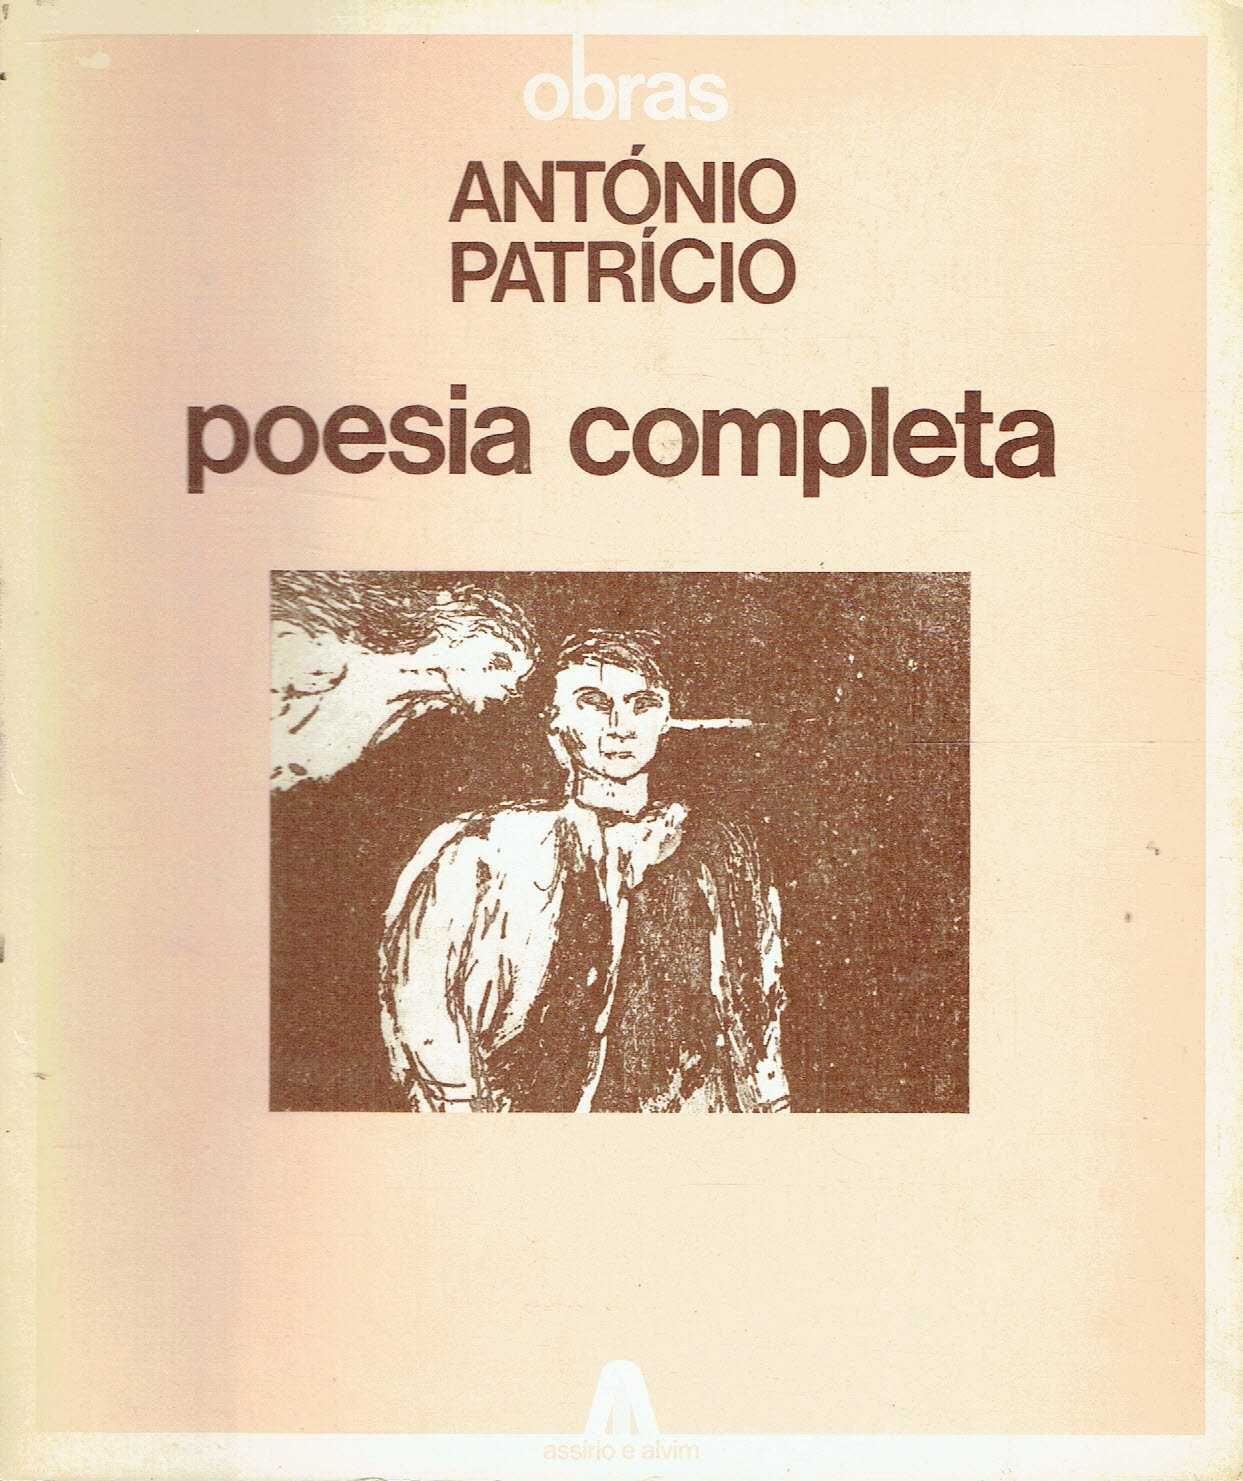 11847

Poesia Completa
de António Patrício